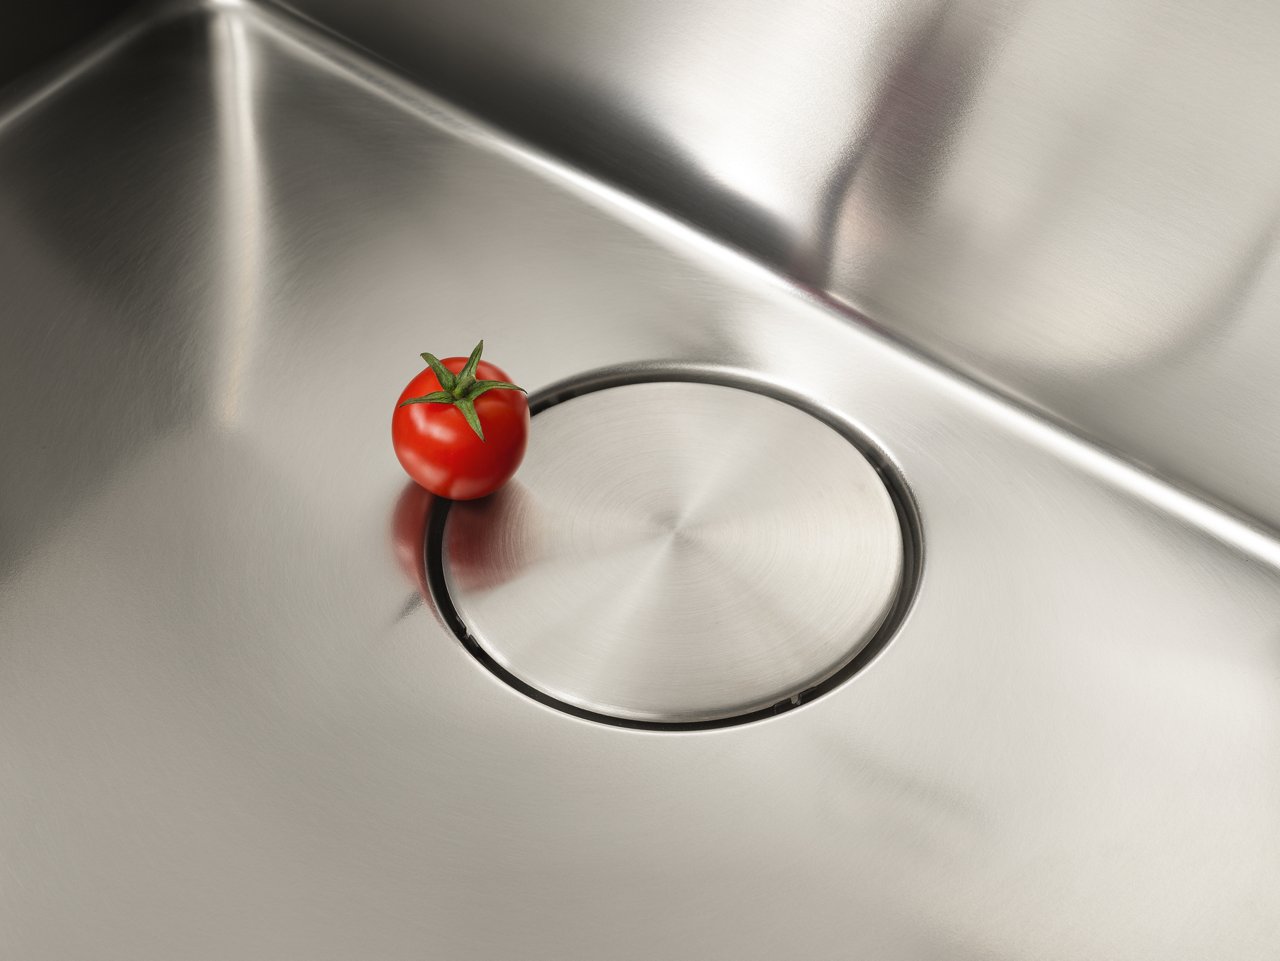 Tomato on Mythos Bowl Sink Waste